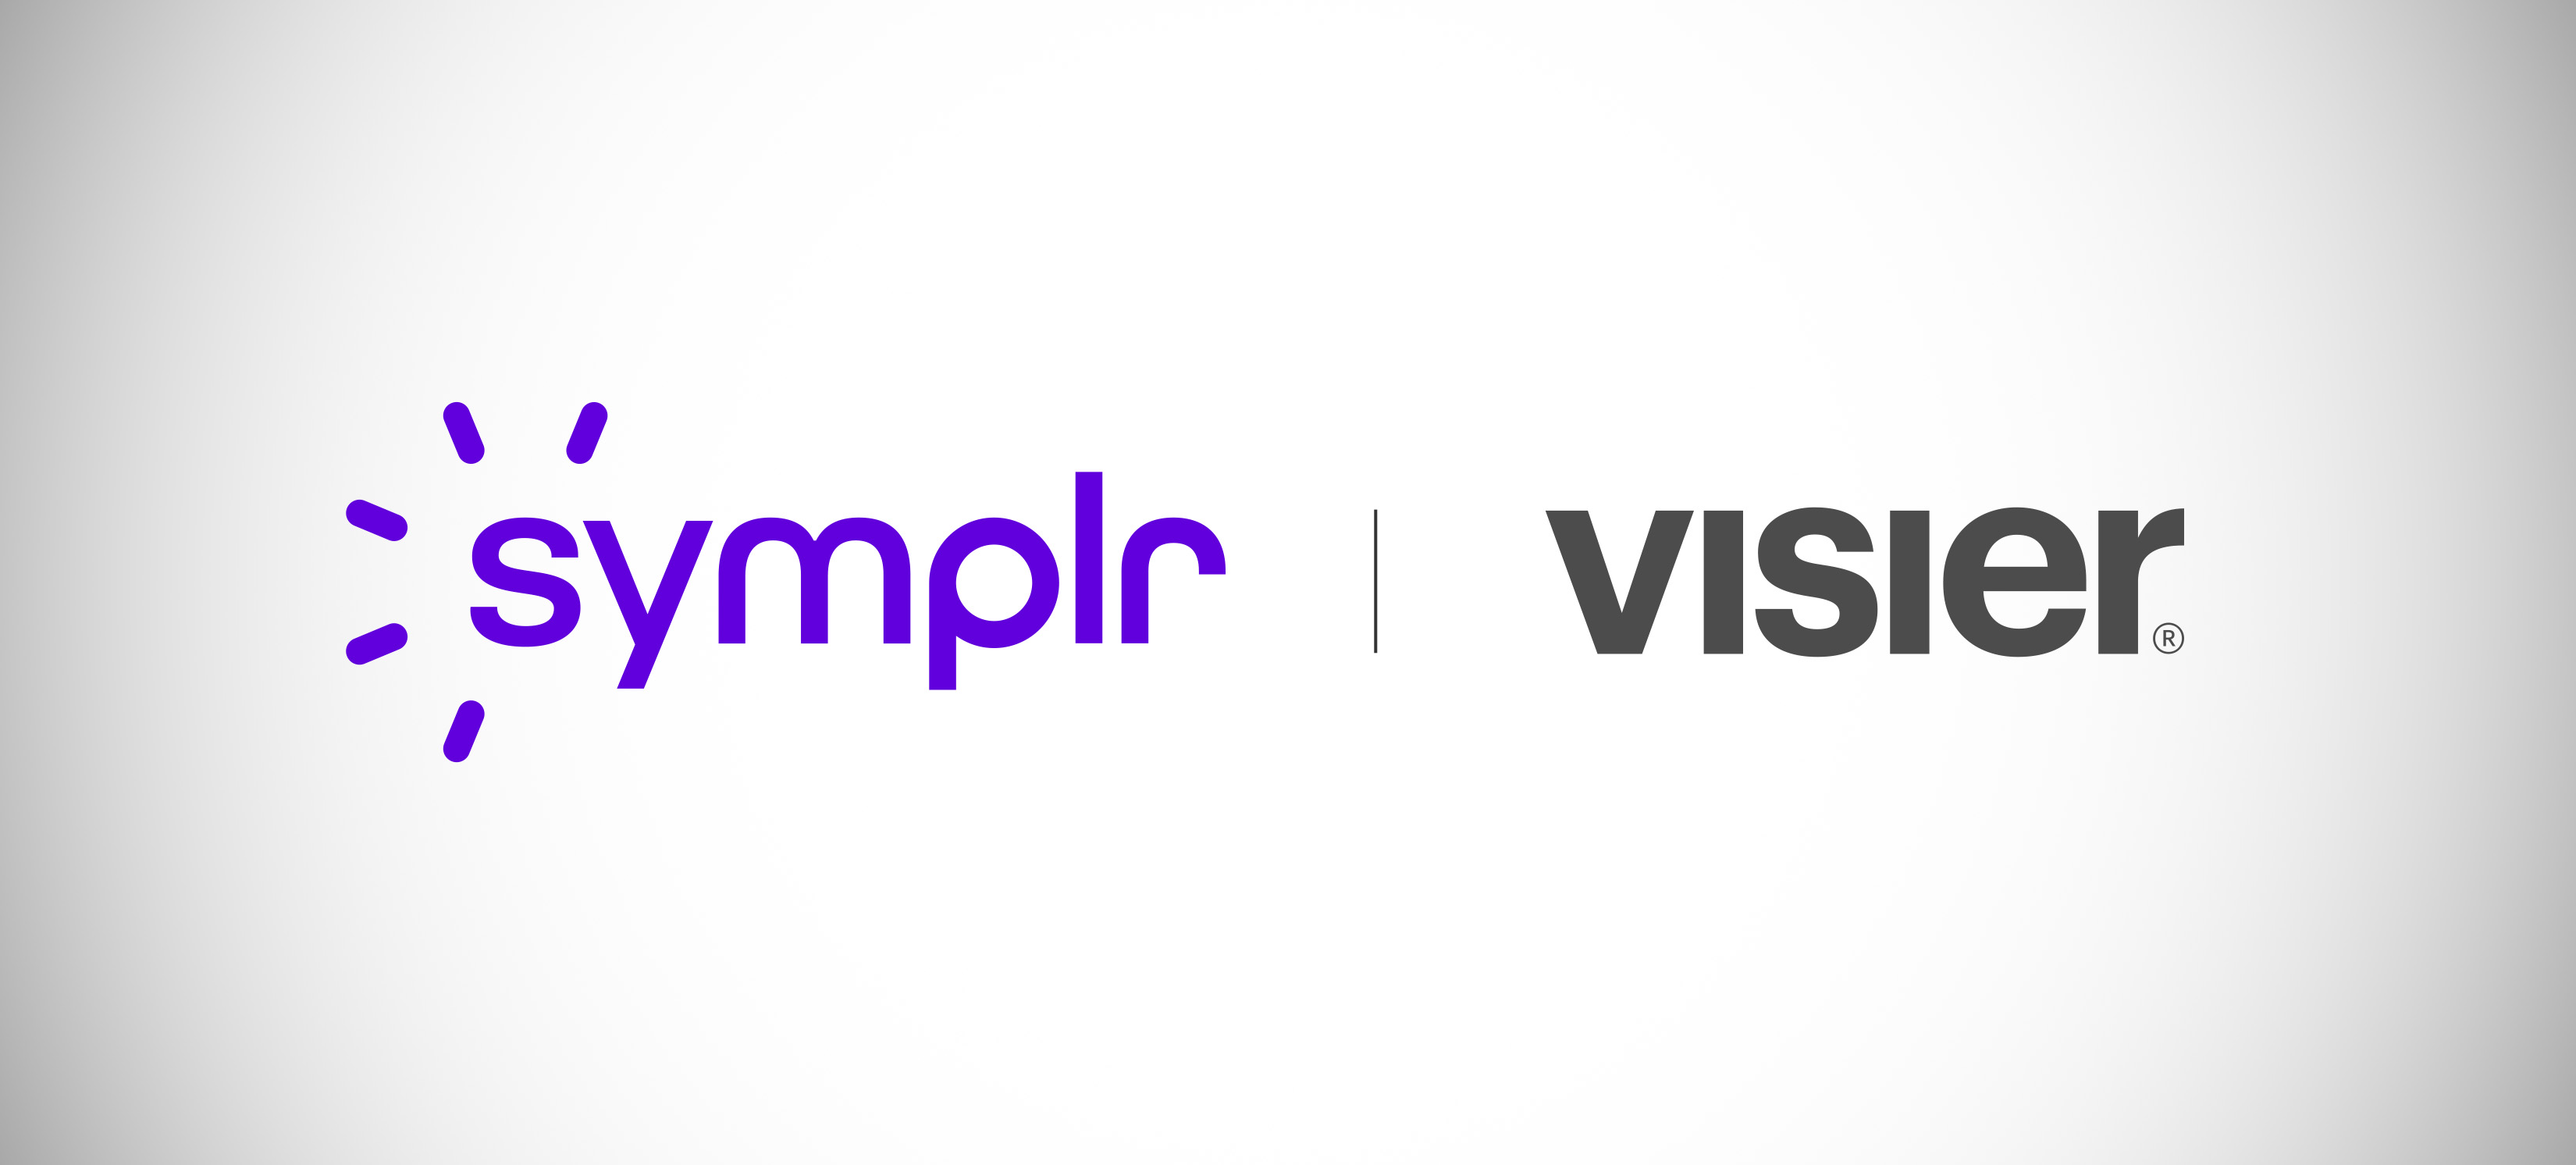 Visier Announces Strategic Partnership with symplr